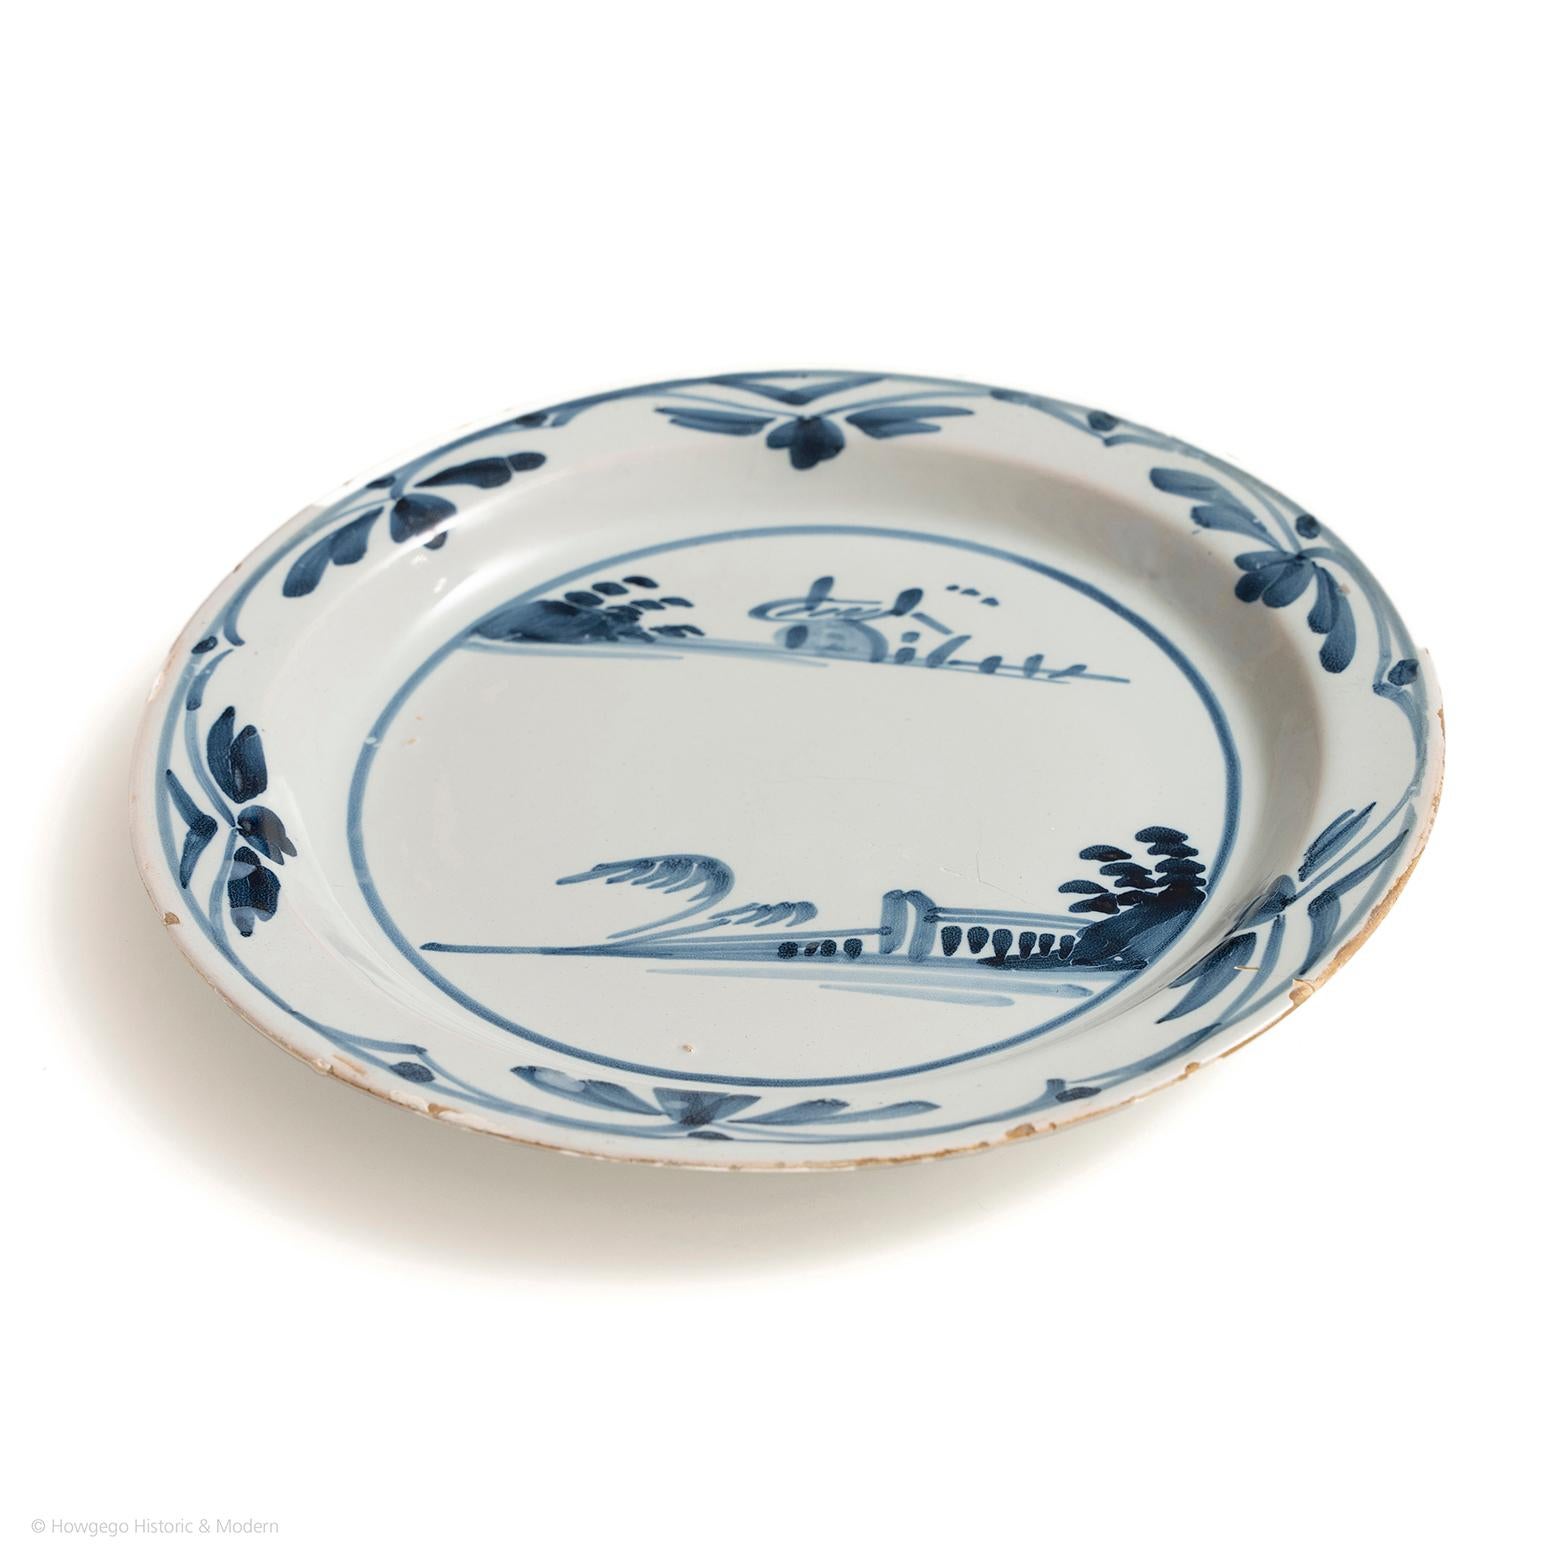 Plate delft London Chinoiserie landscape blue white pottery diameter 22.5cm 9